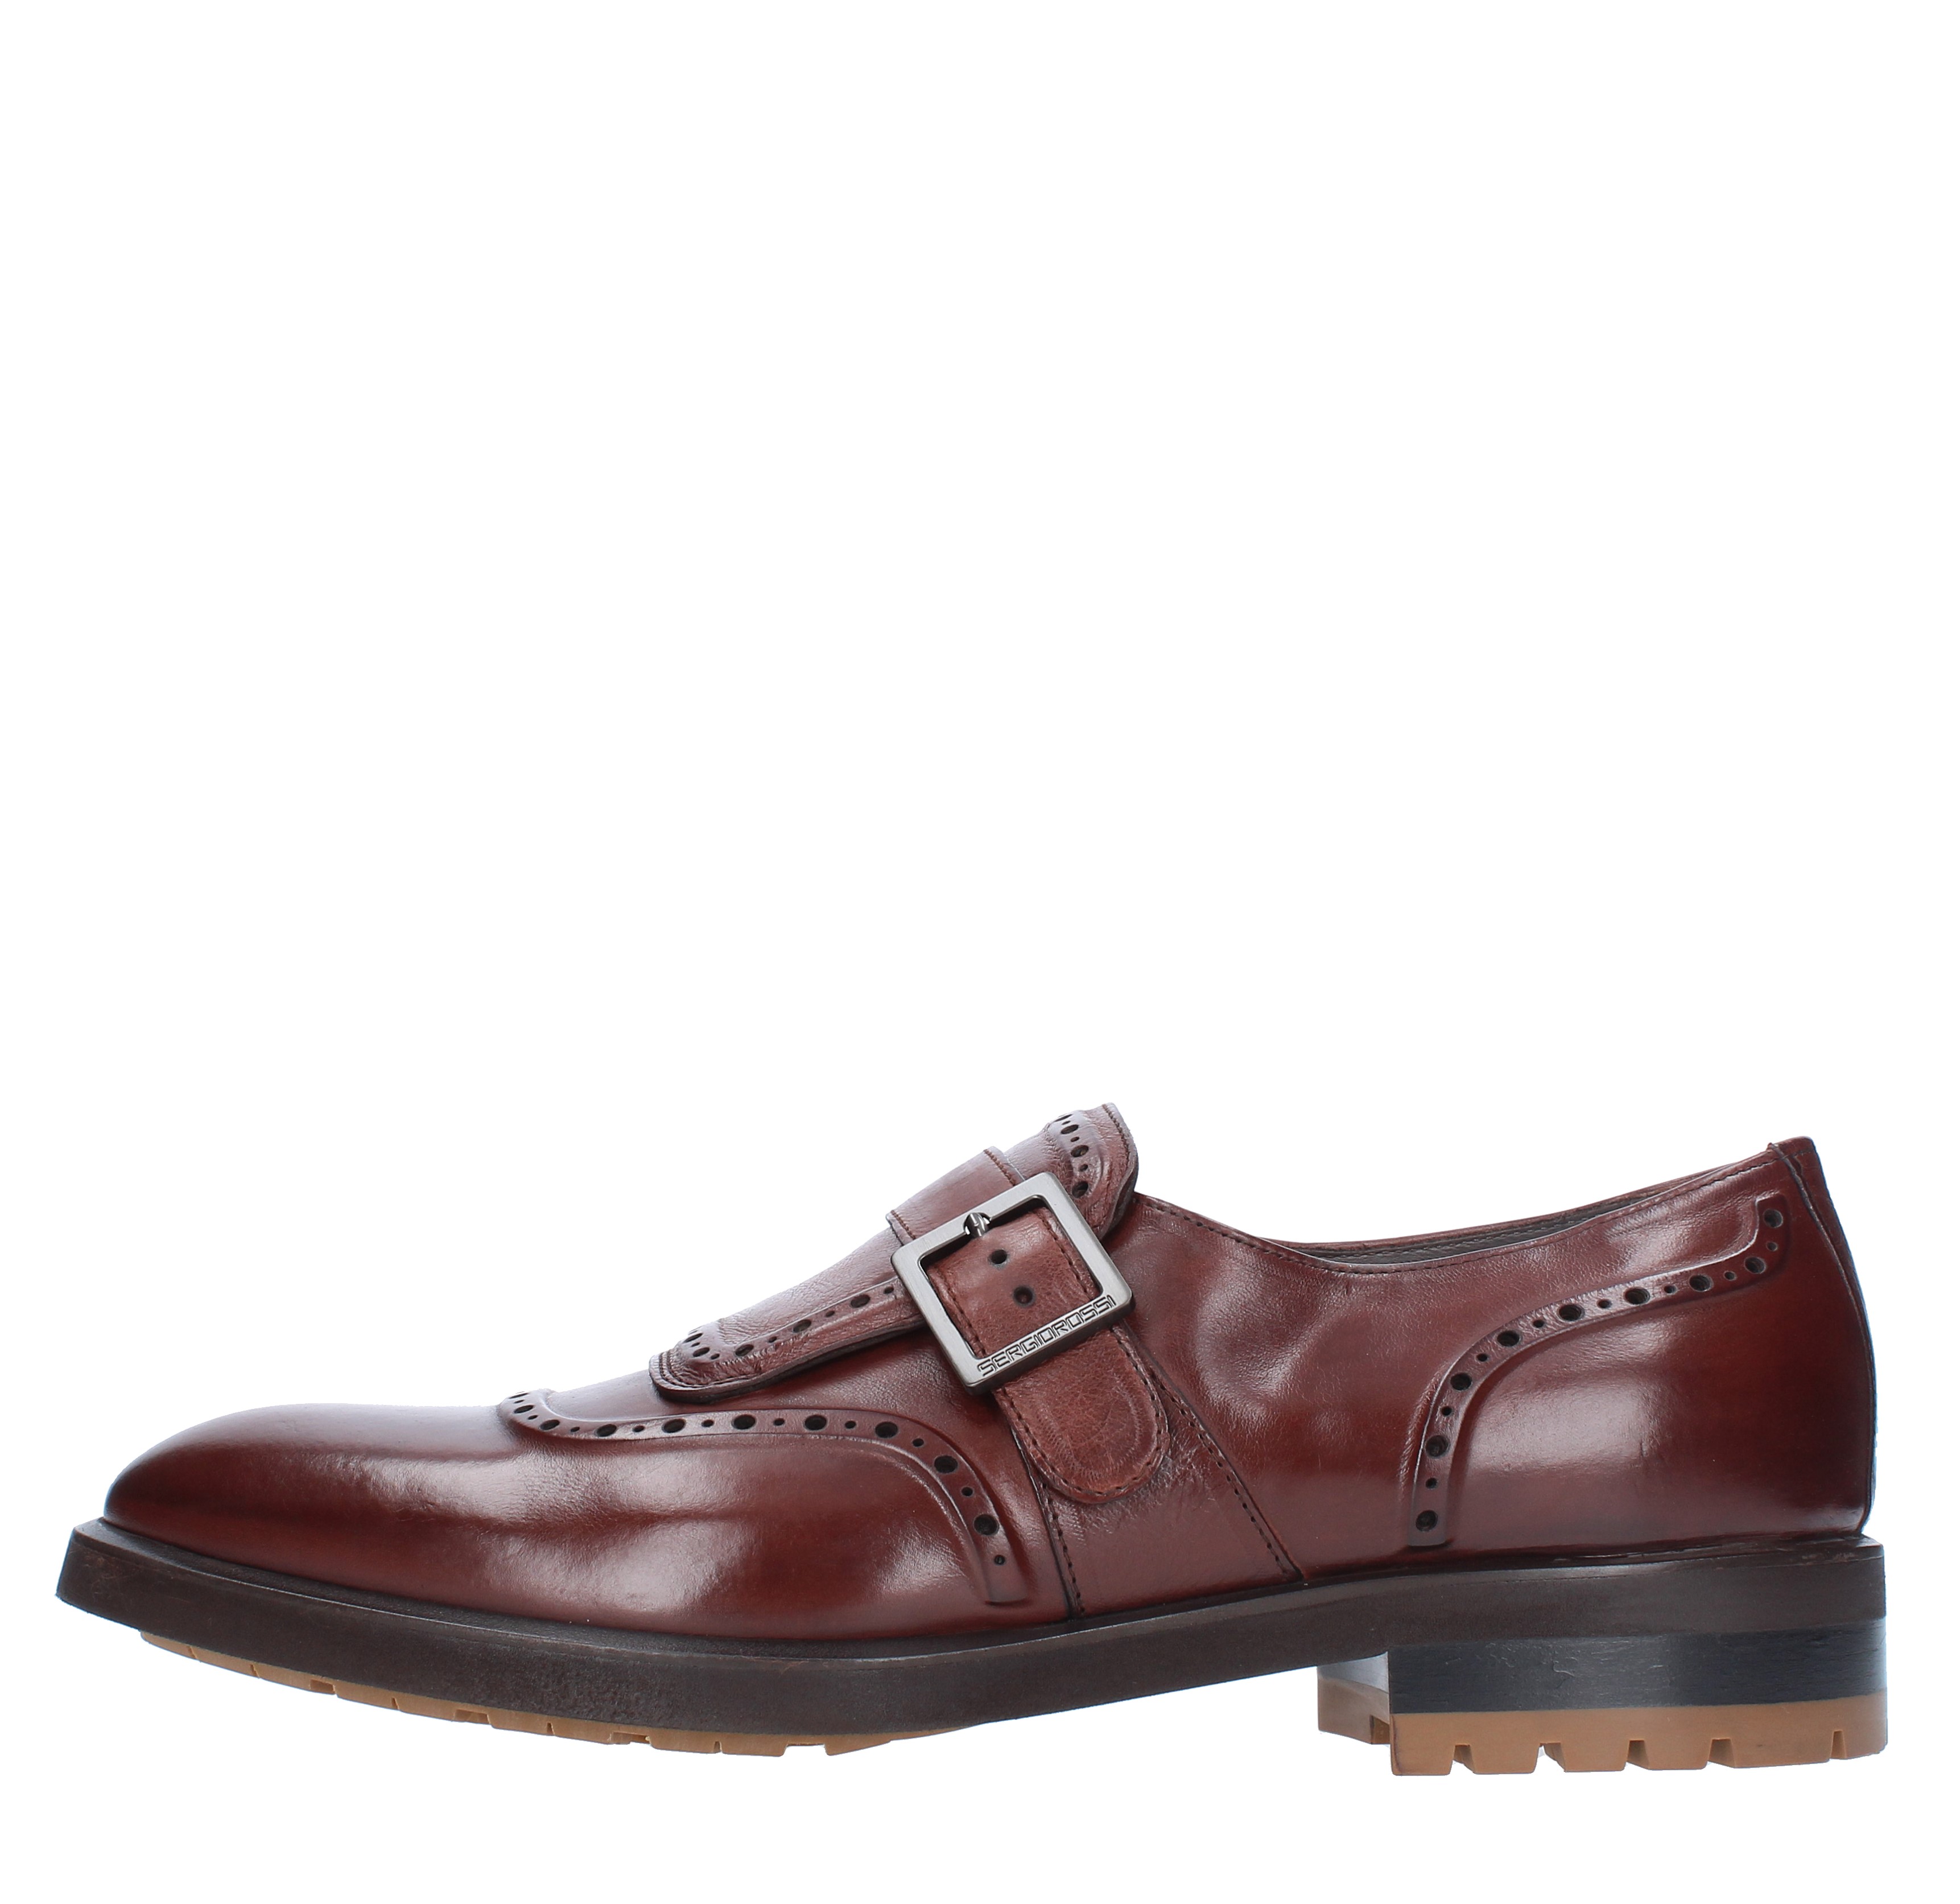 Leather moccasins - SERGIO ROSSI - Ginevra calzature